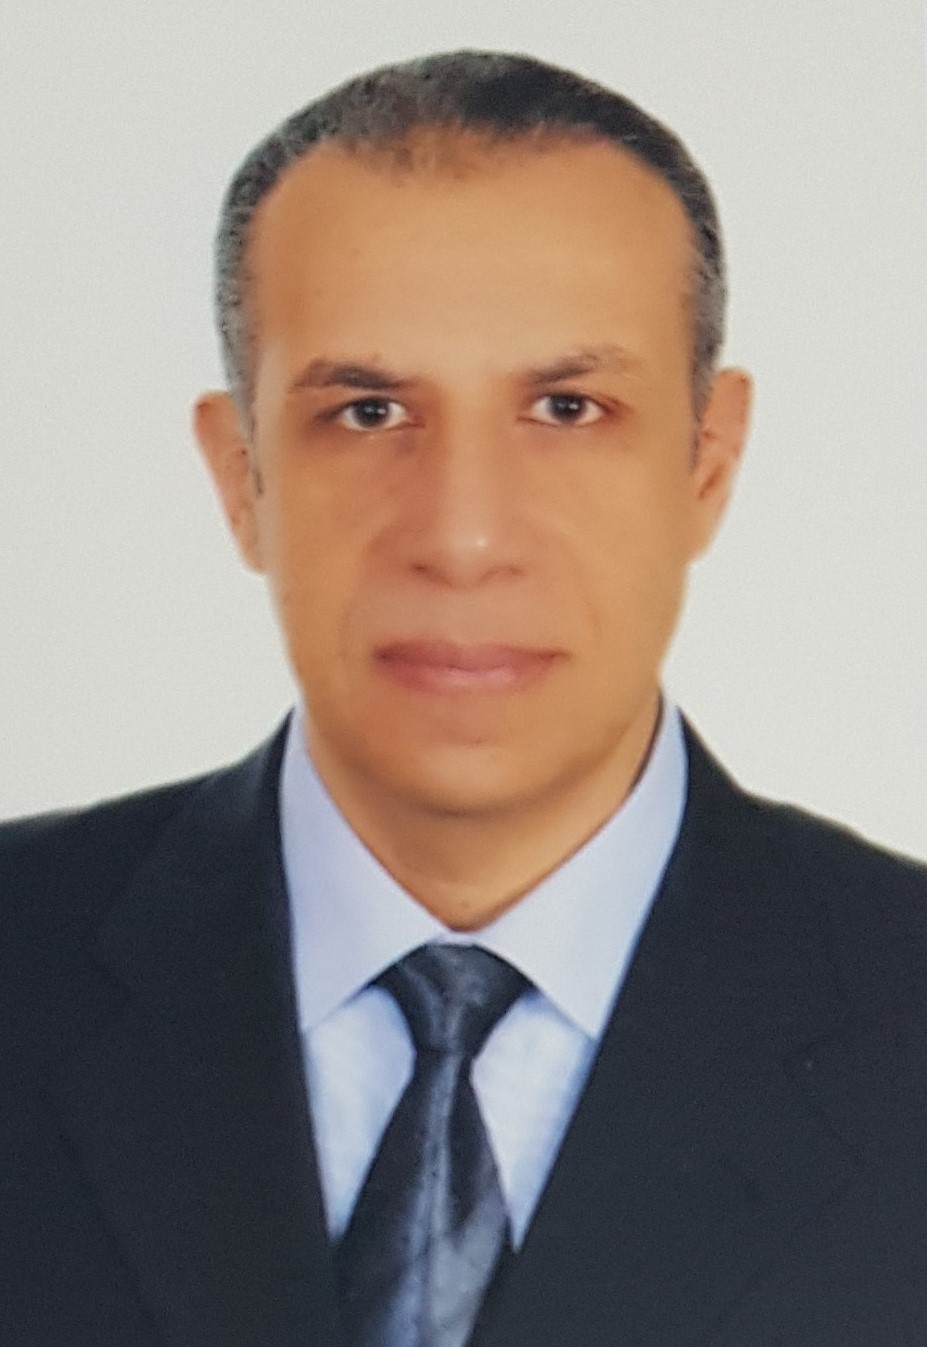 Dr. Mohamed Daabiss